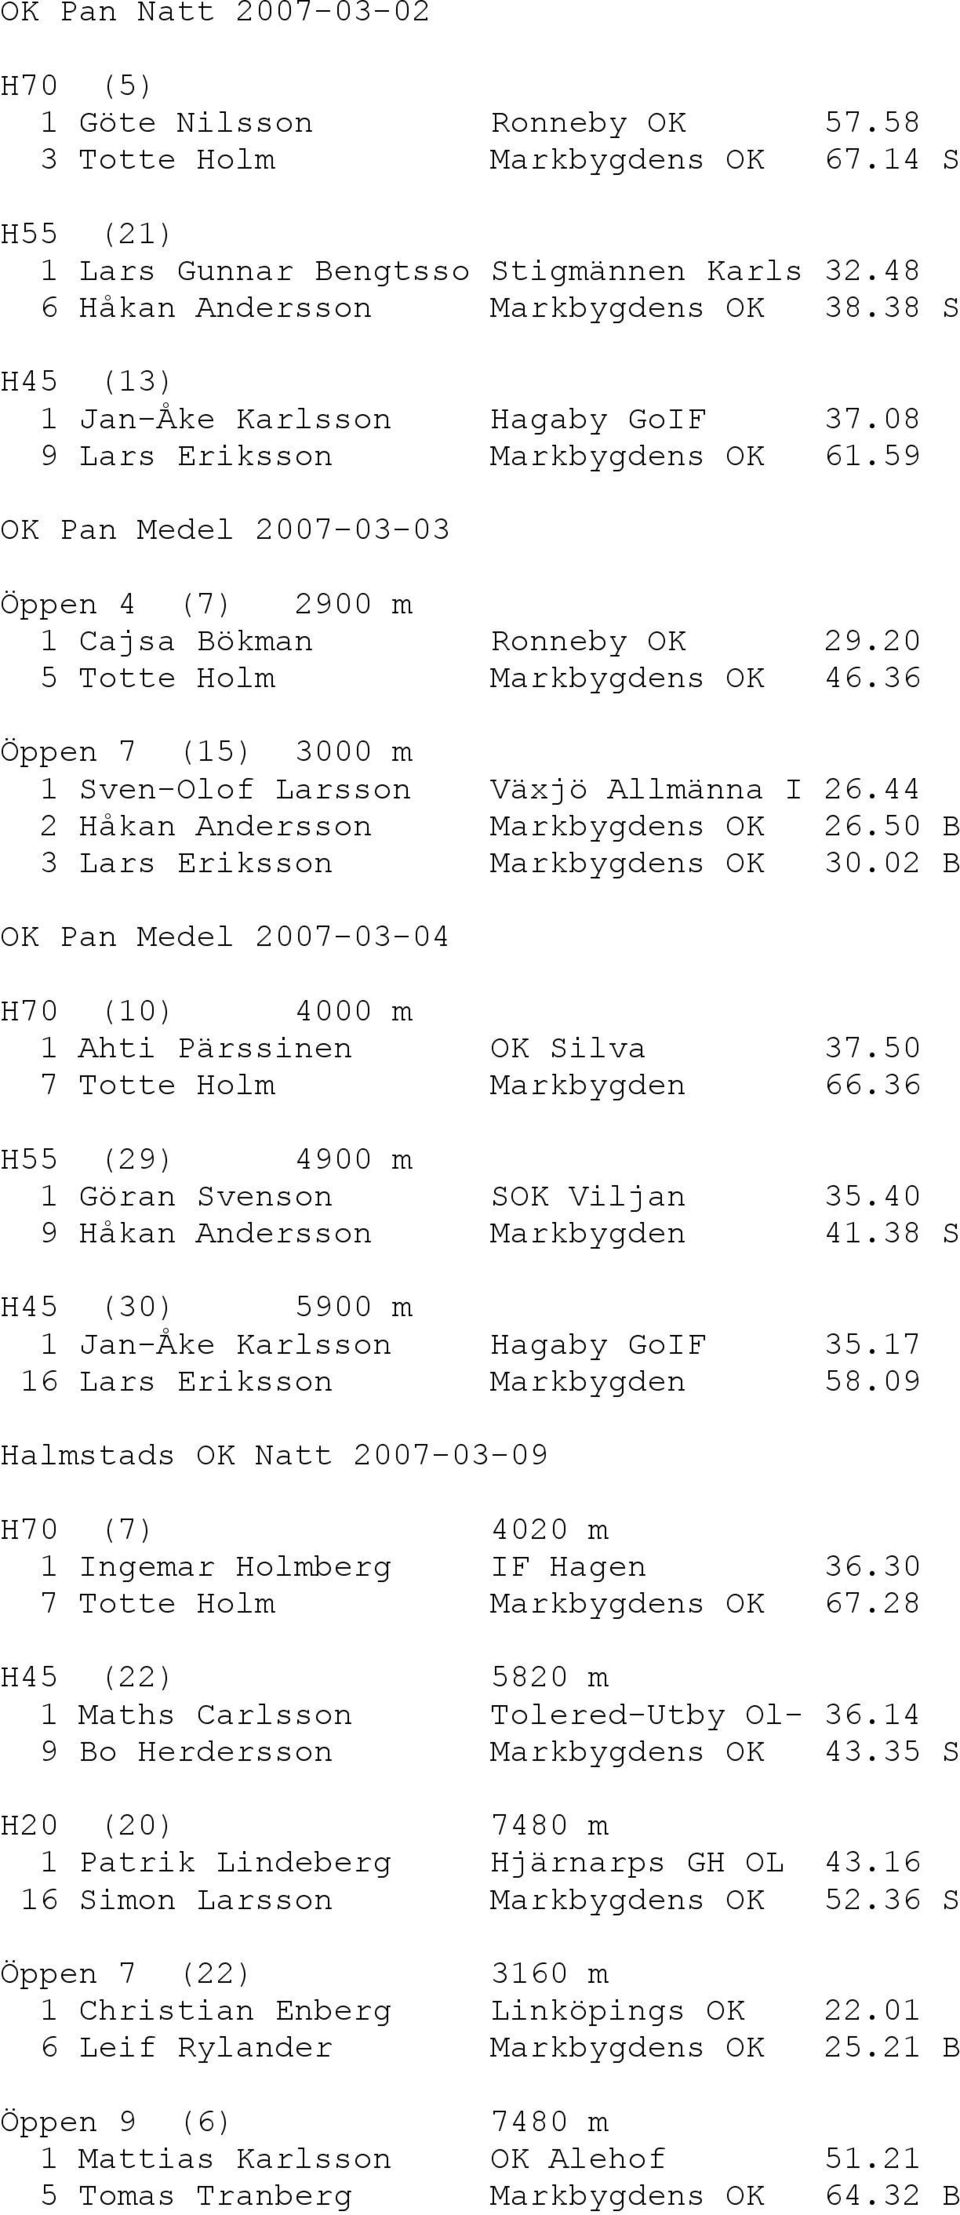 36 Öppen 7 (15) 3000 m 1 Sven-Olof Larsson Växjö Allmänna I 26.44 2 Håkan Andersson Markbygdens OK 26.50 B 3 Lars Eriksson Markbygdens OK 30.